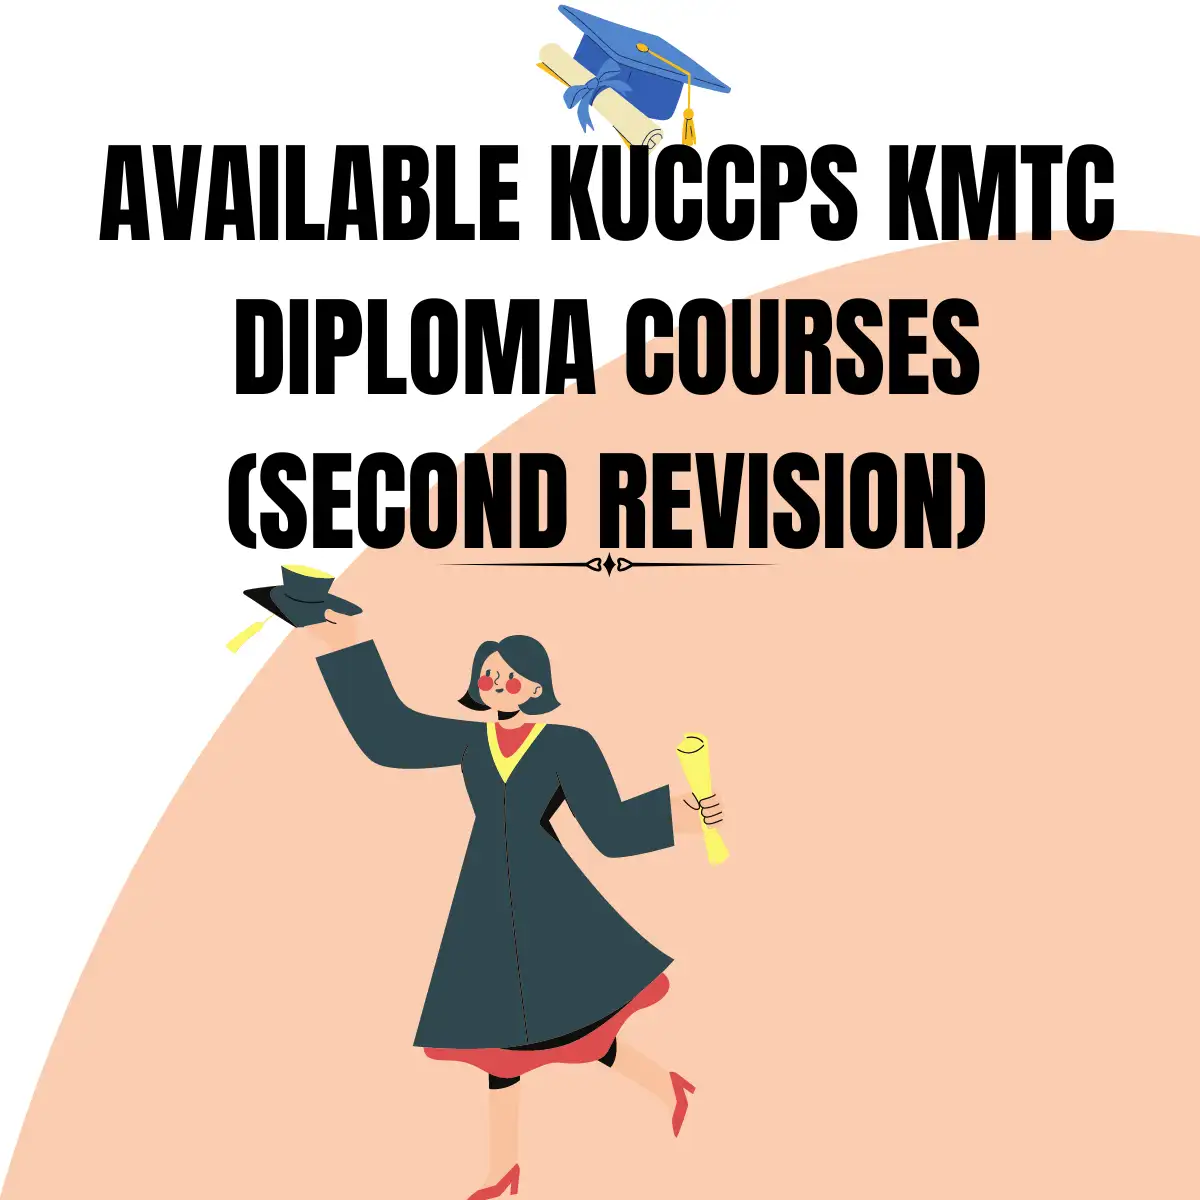 KUCCPS KMTC Courses